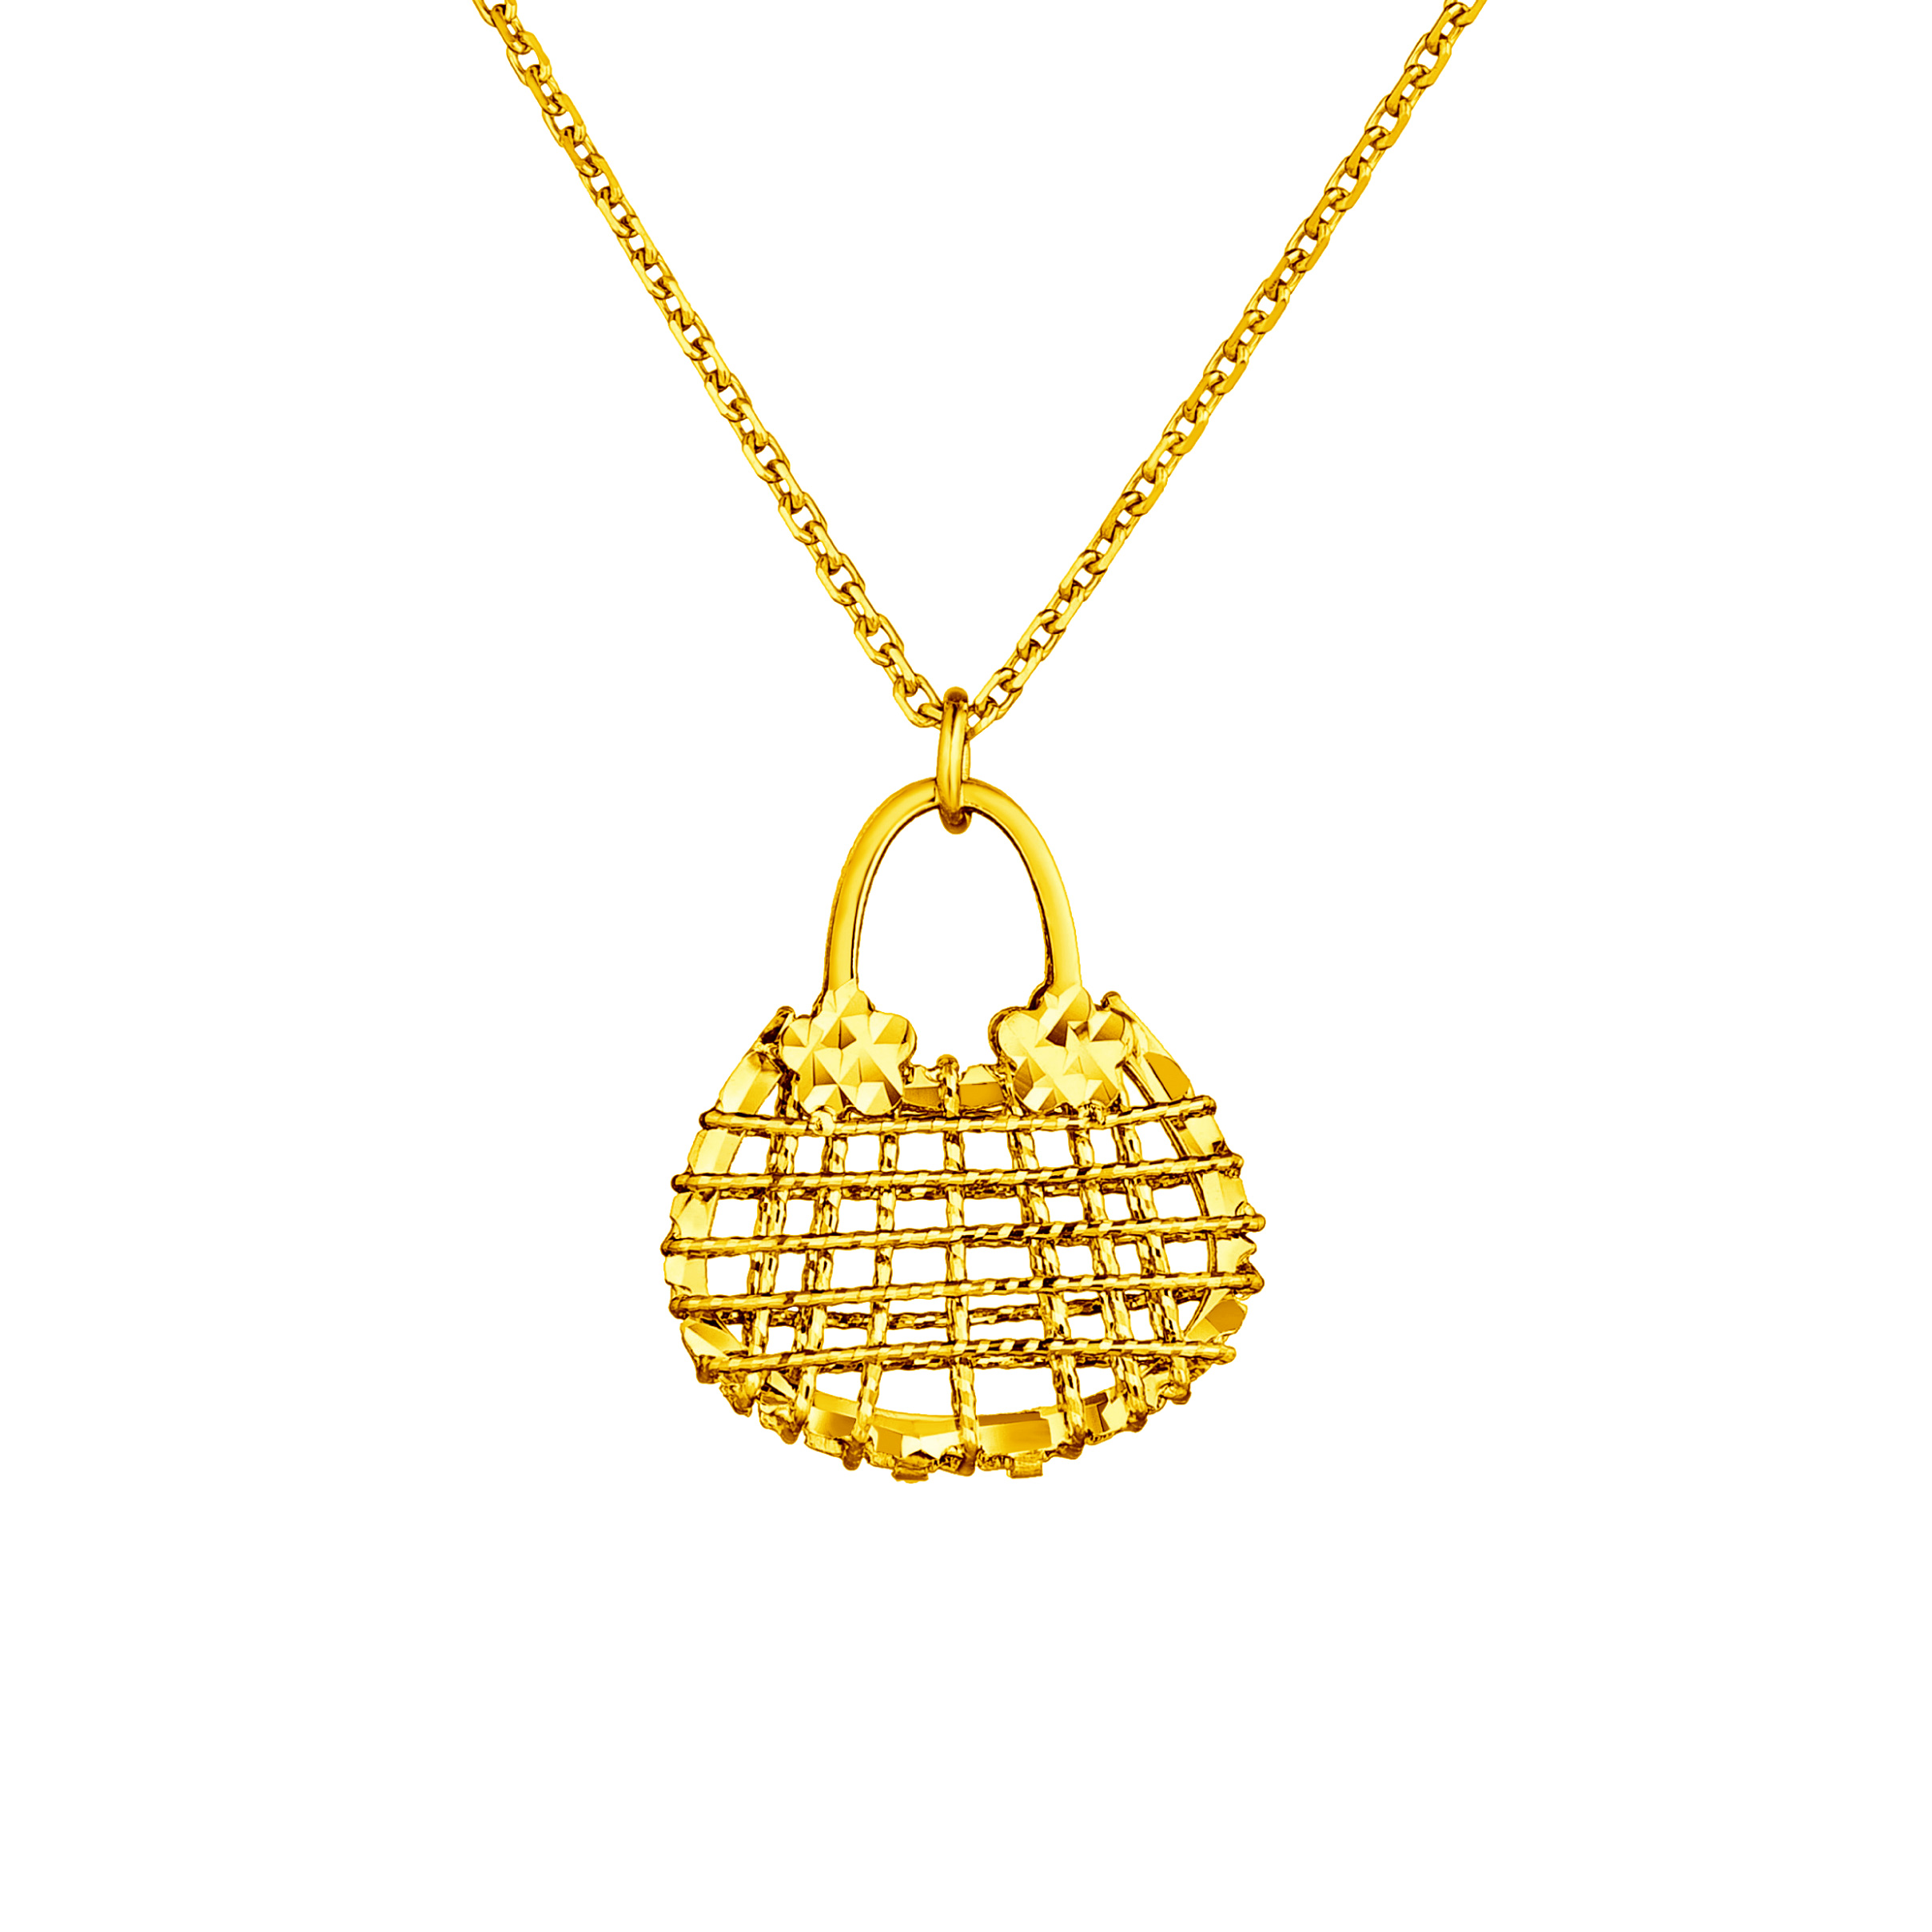 Goldstyle "Fashion Handbag" Gold Necklace